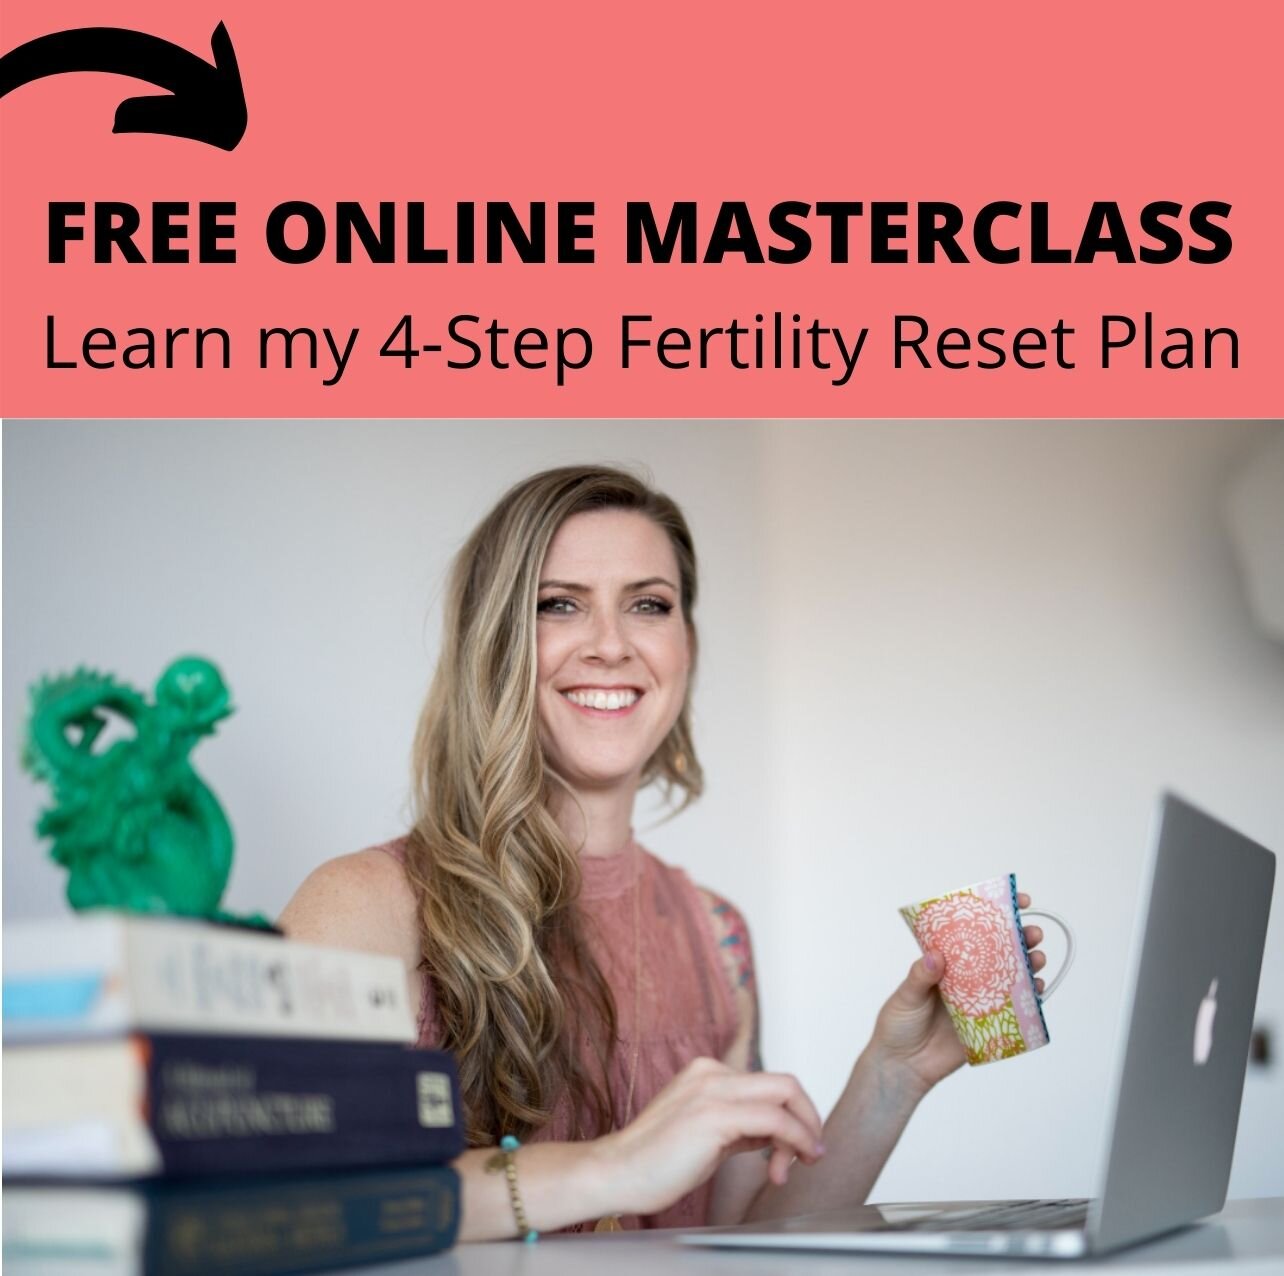 Learn my 4-Step Fertility Reset Plan